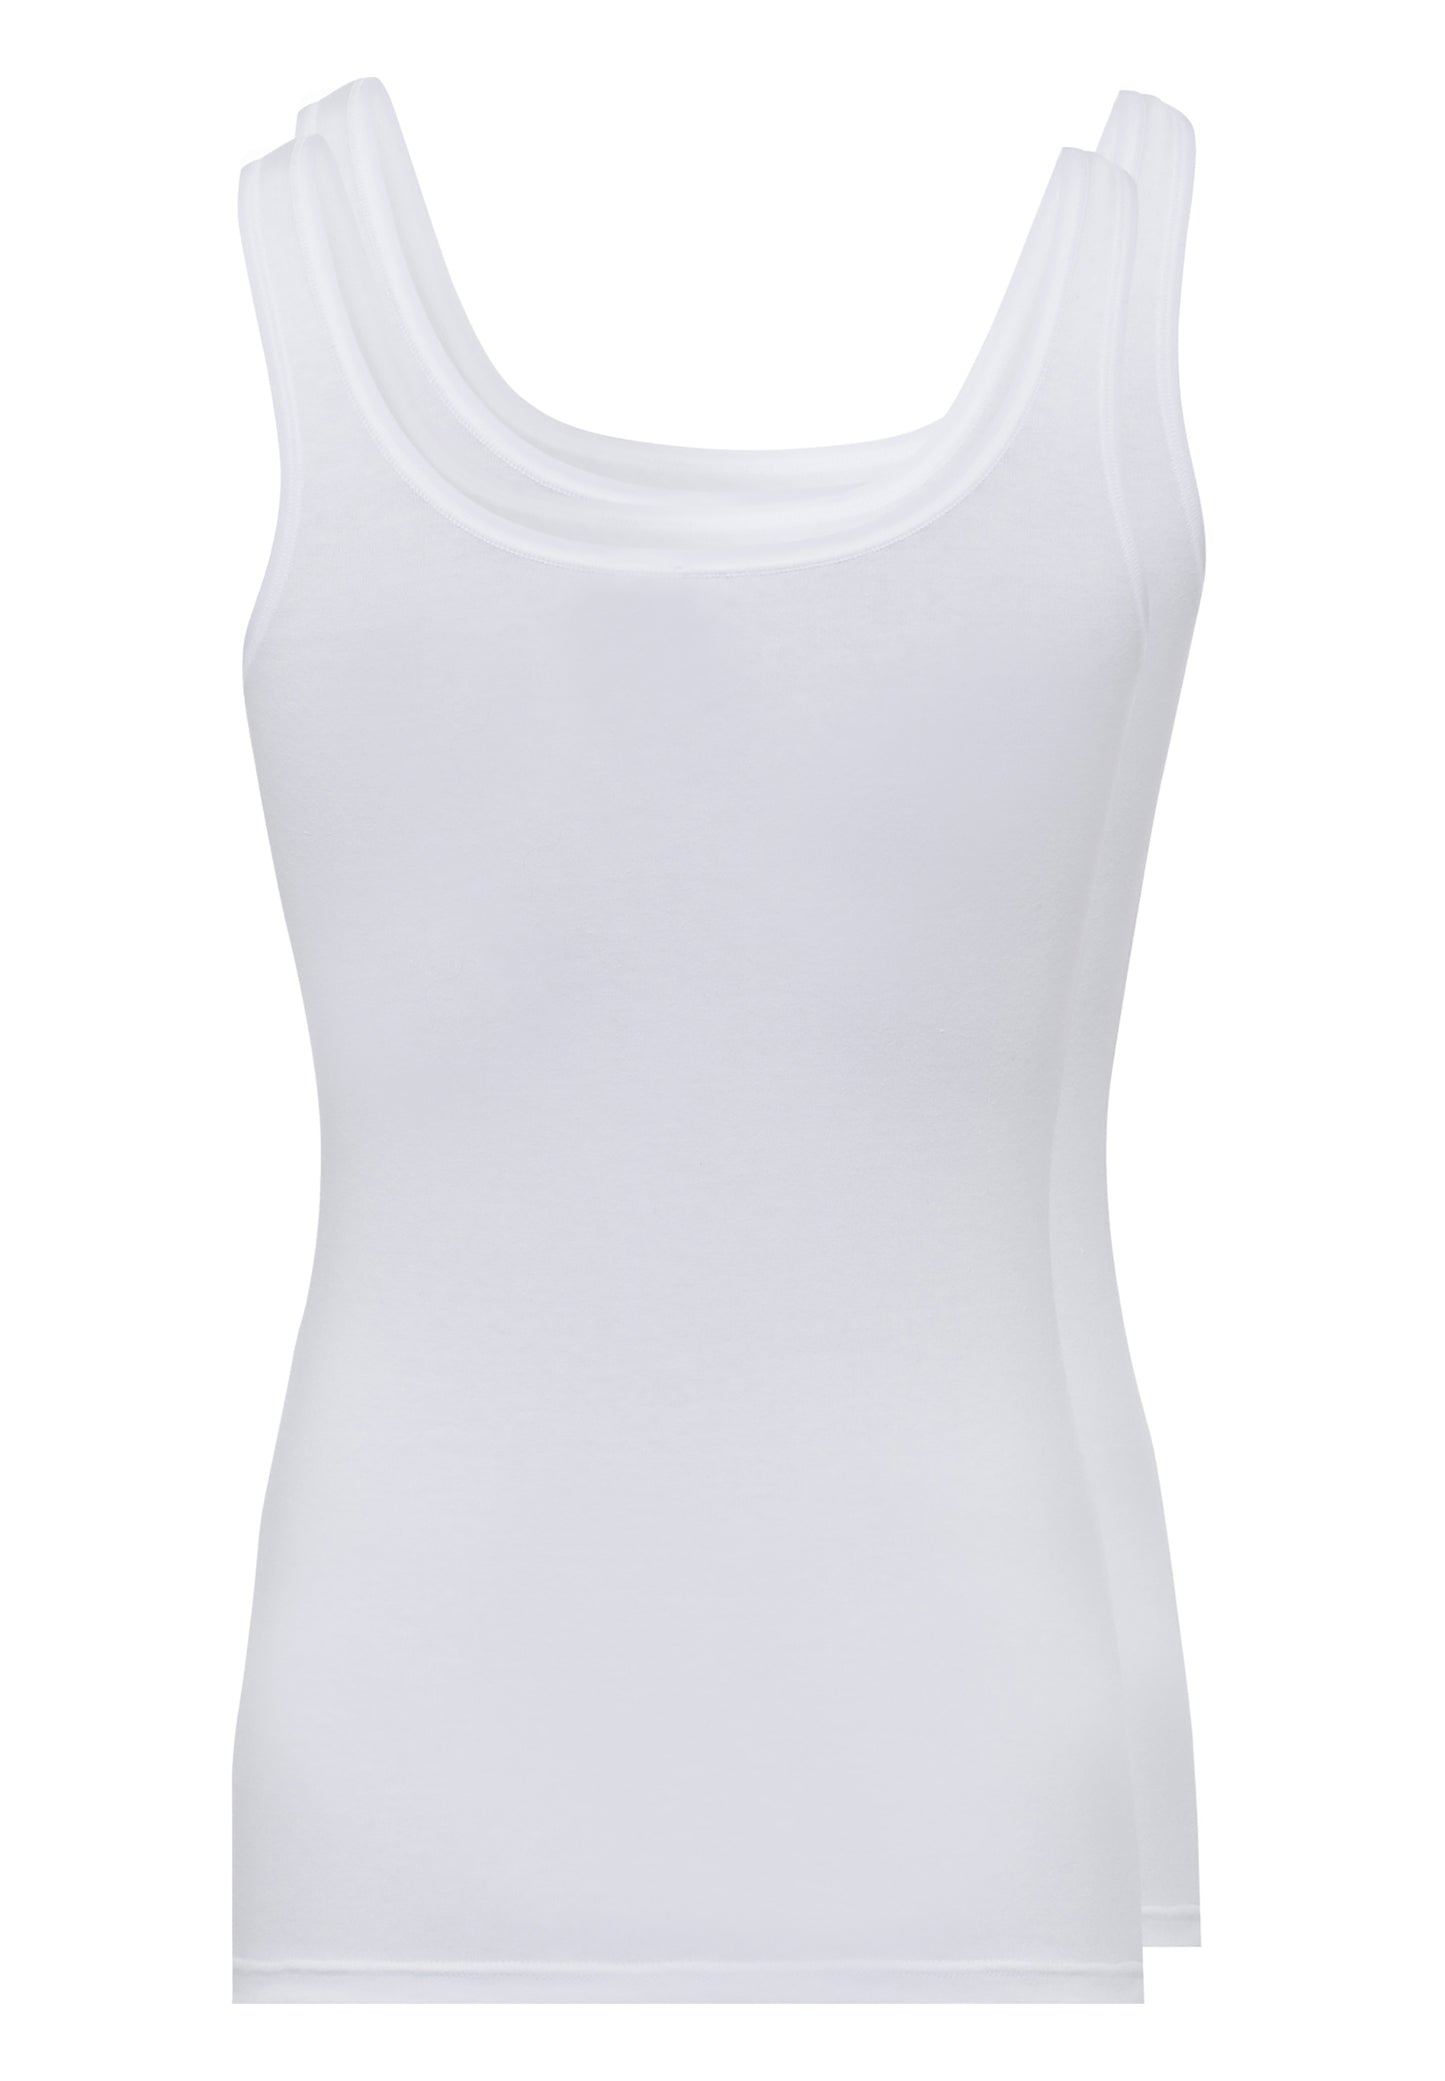 Skiny Damen Tank Top 2er Pack Advantage Cotton (White)